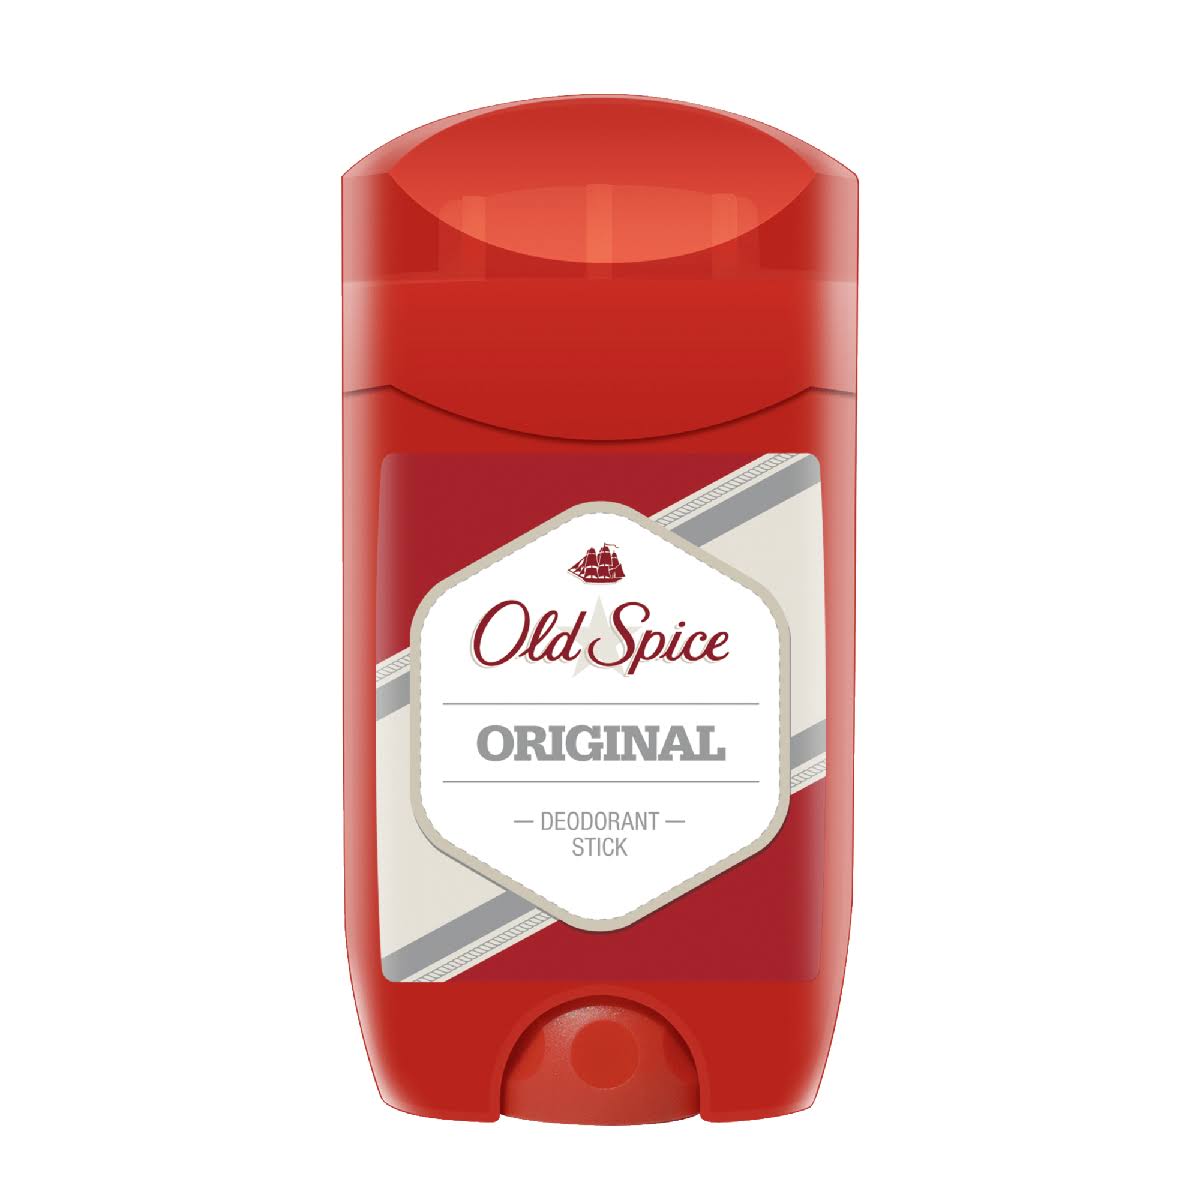 Old Spice Deodorant Stick - Original, 50ml